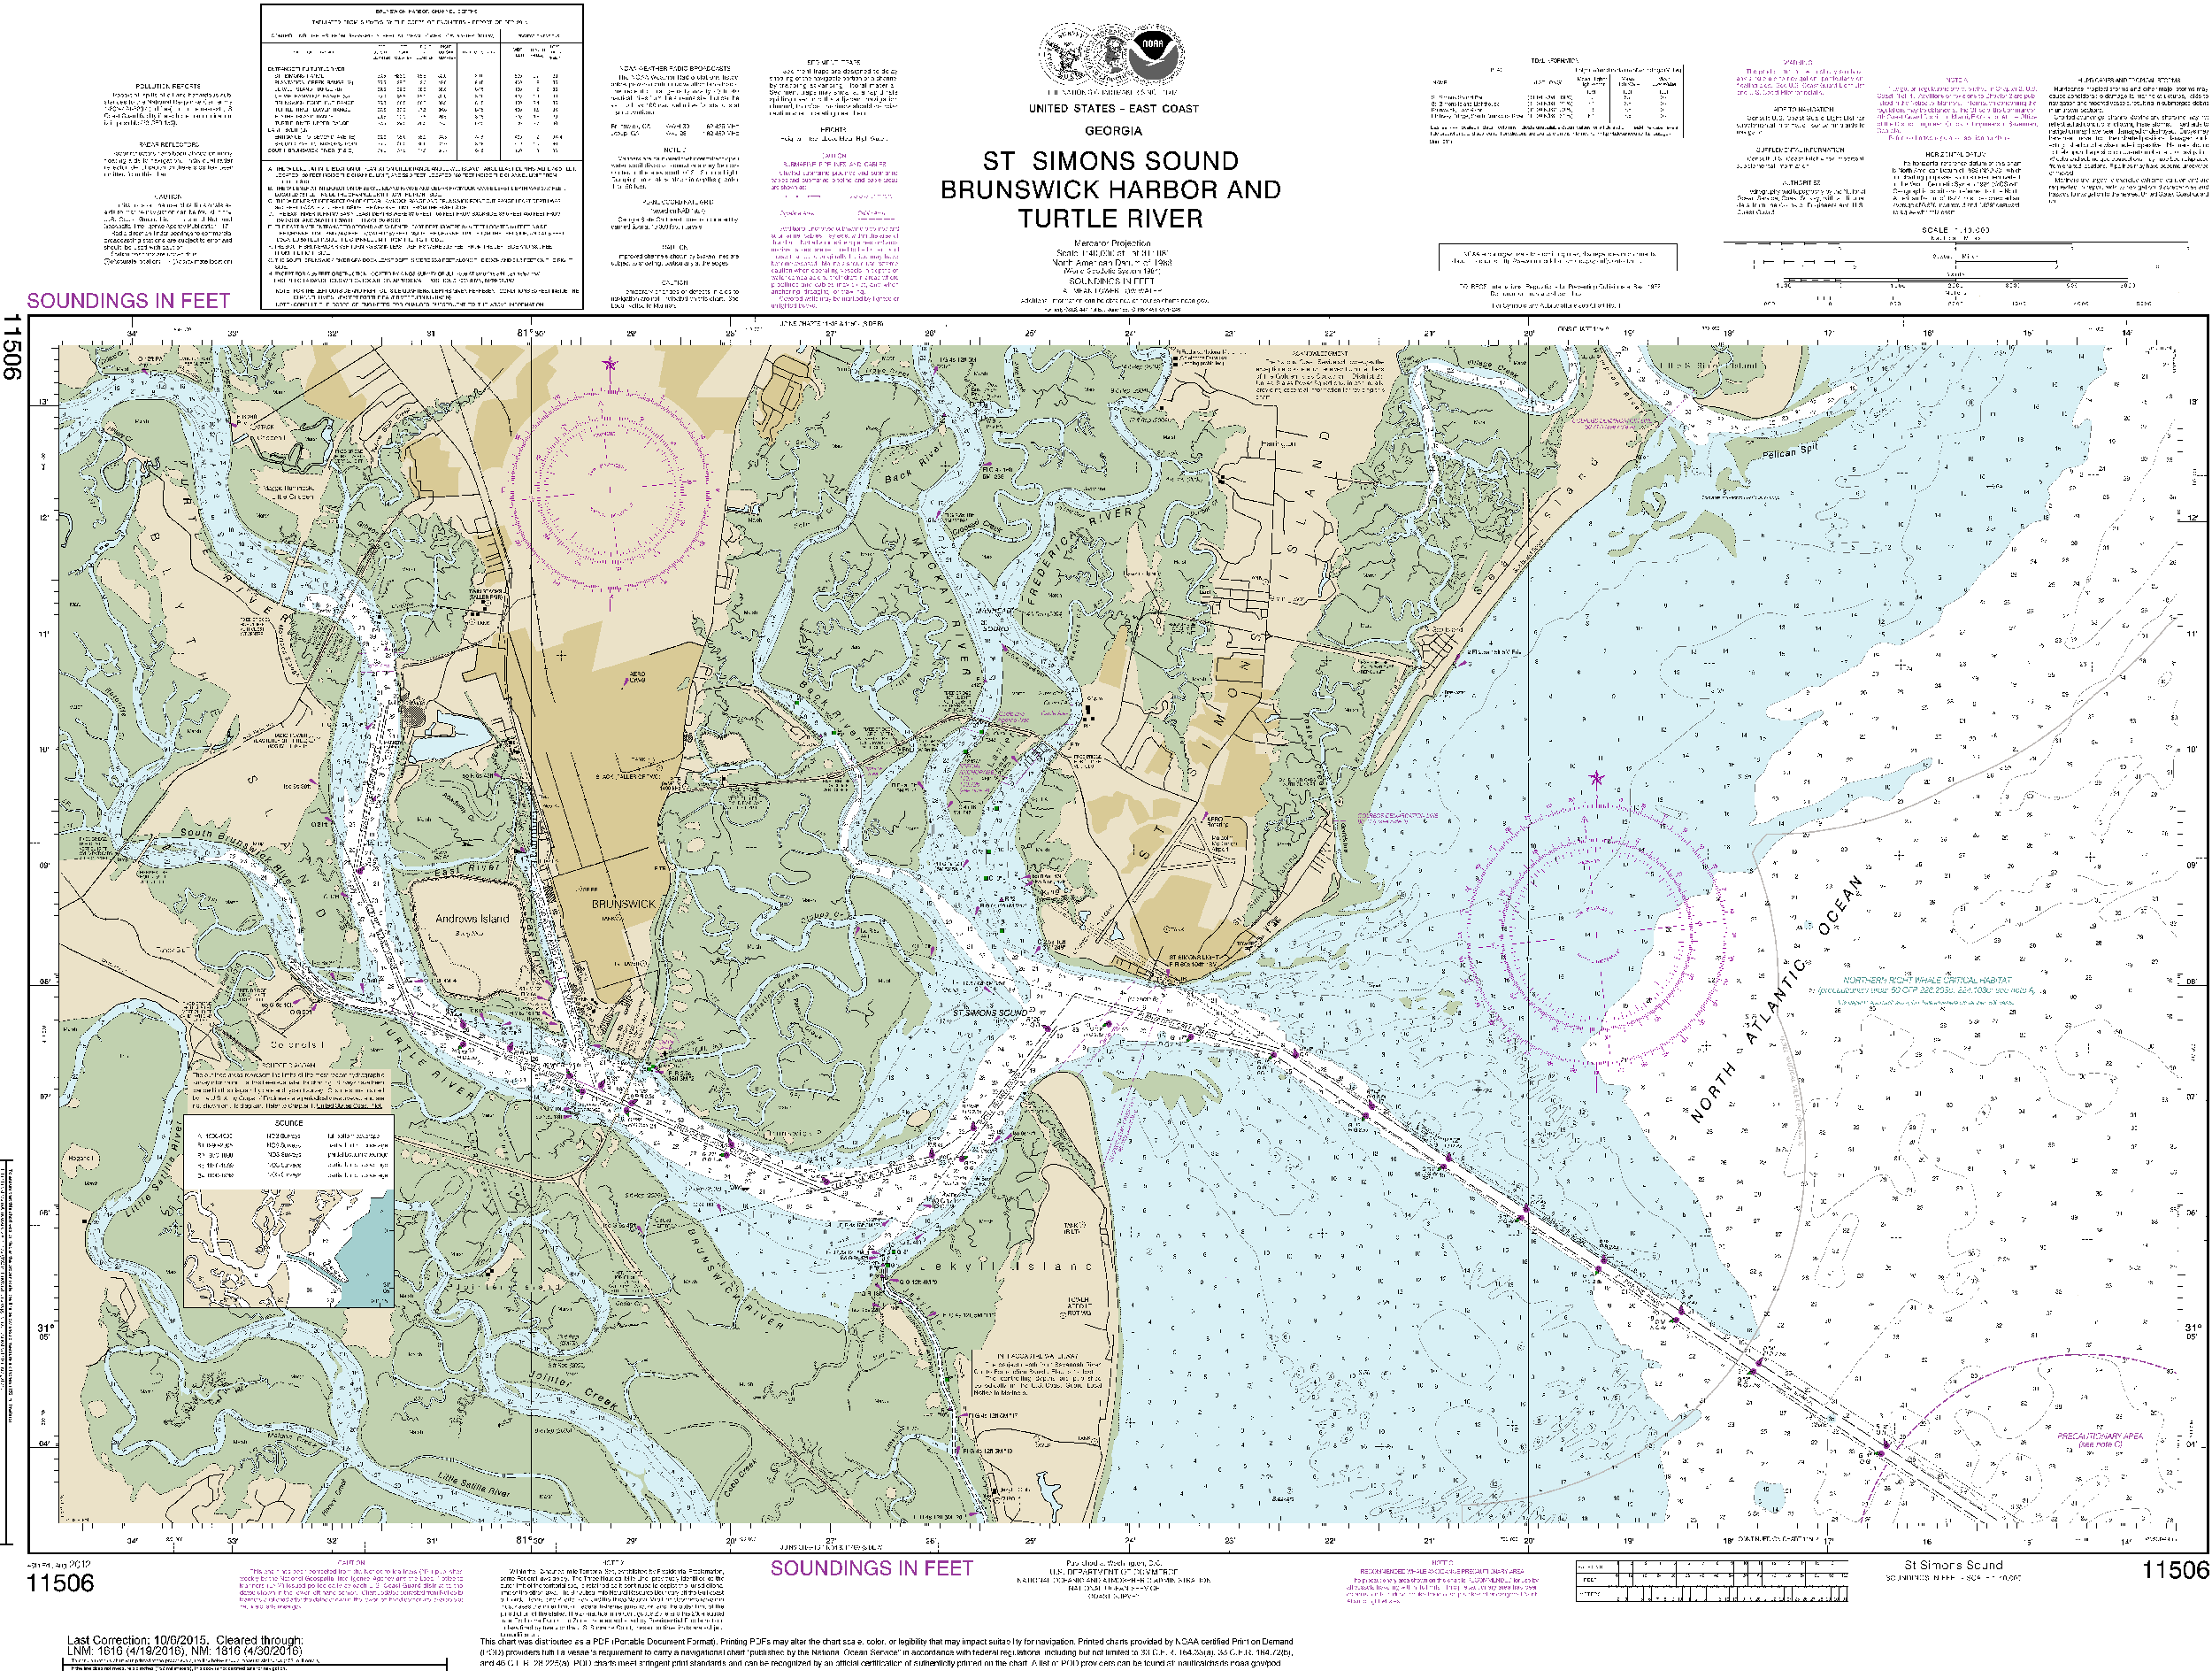 NOAA Nautical Chart 11506: St. Simons Sound, Brunswick Harbor and Turtle River